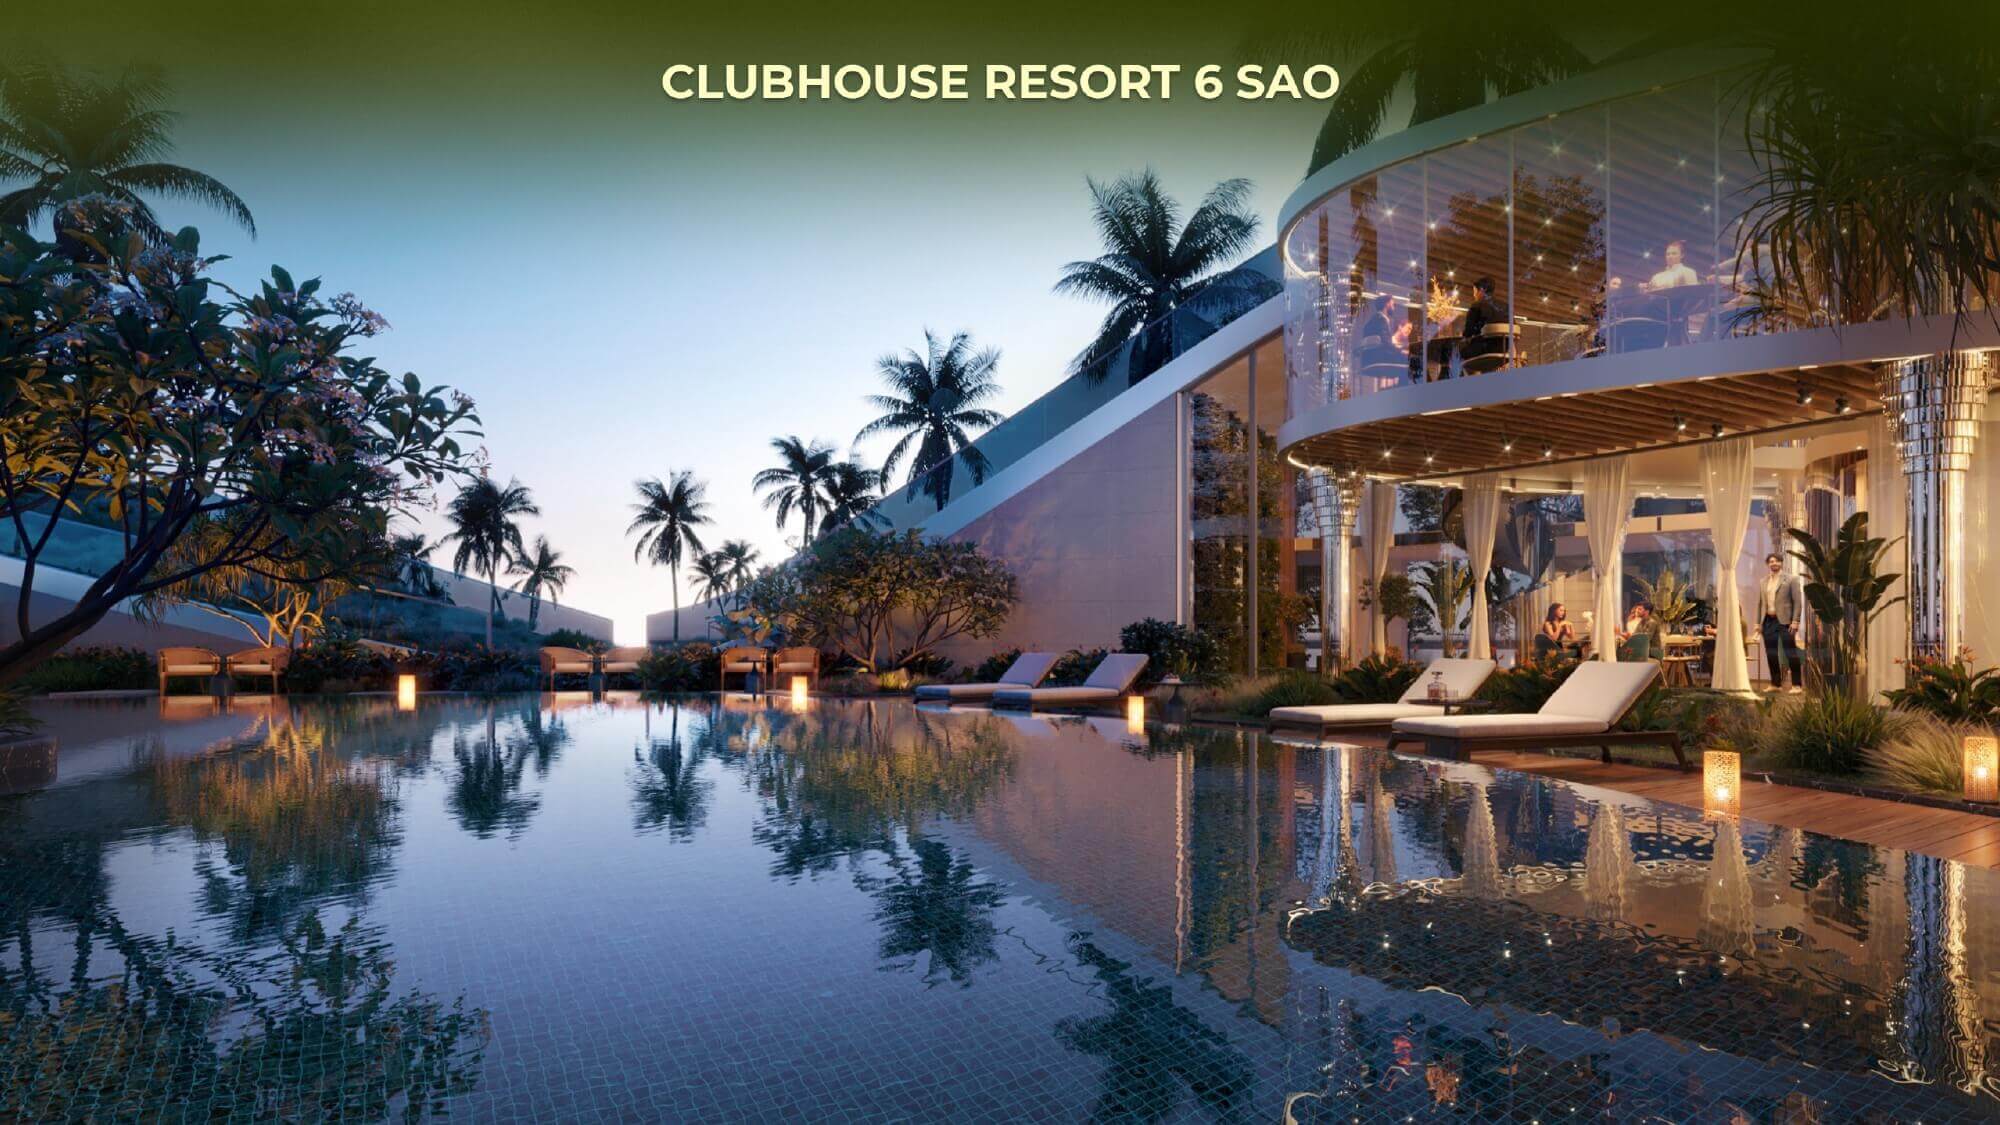 Clubhouse resort 6 sao